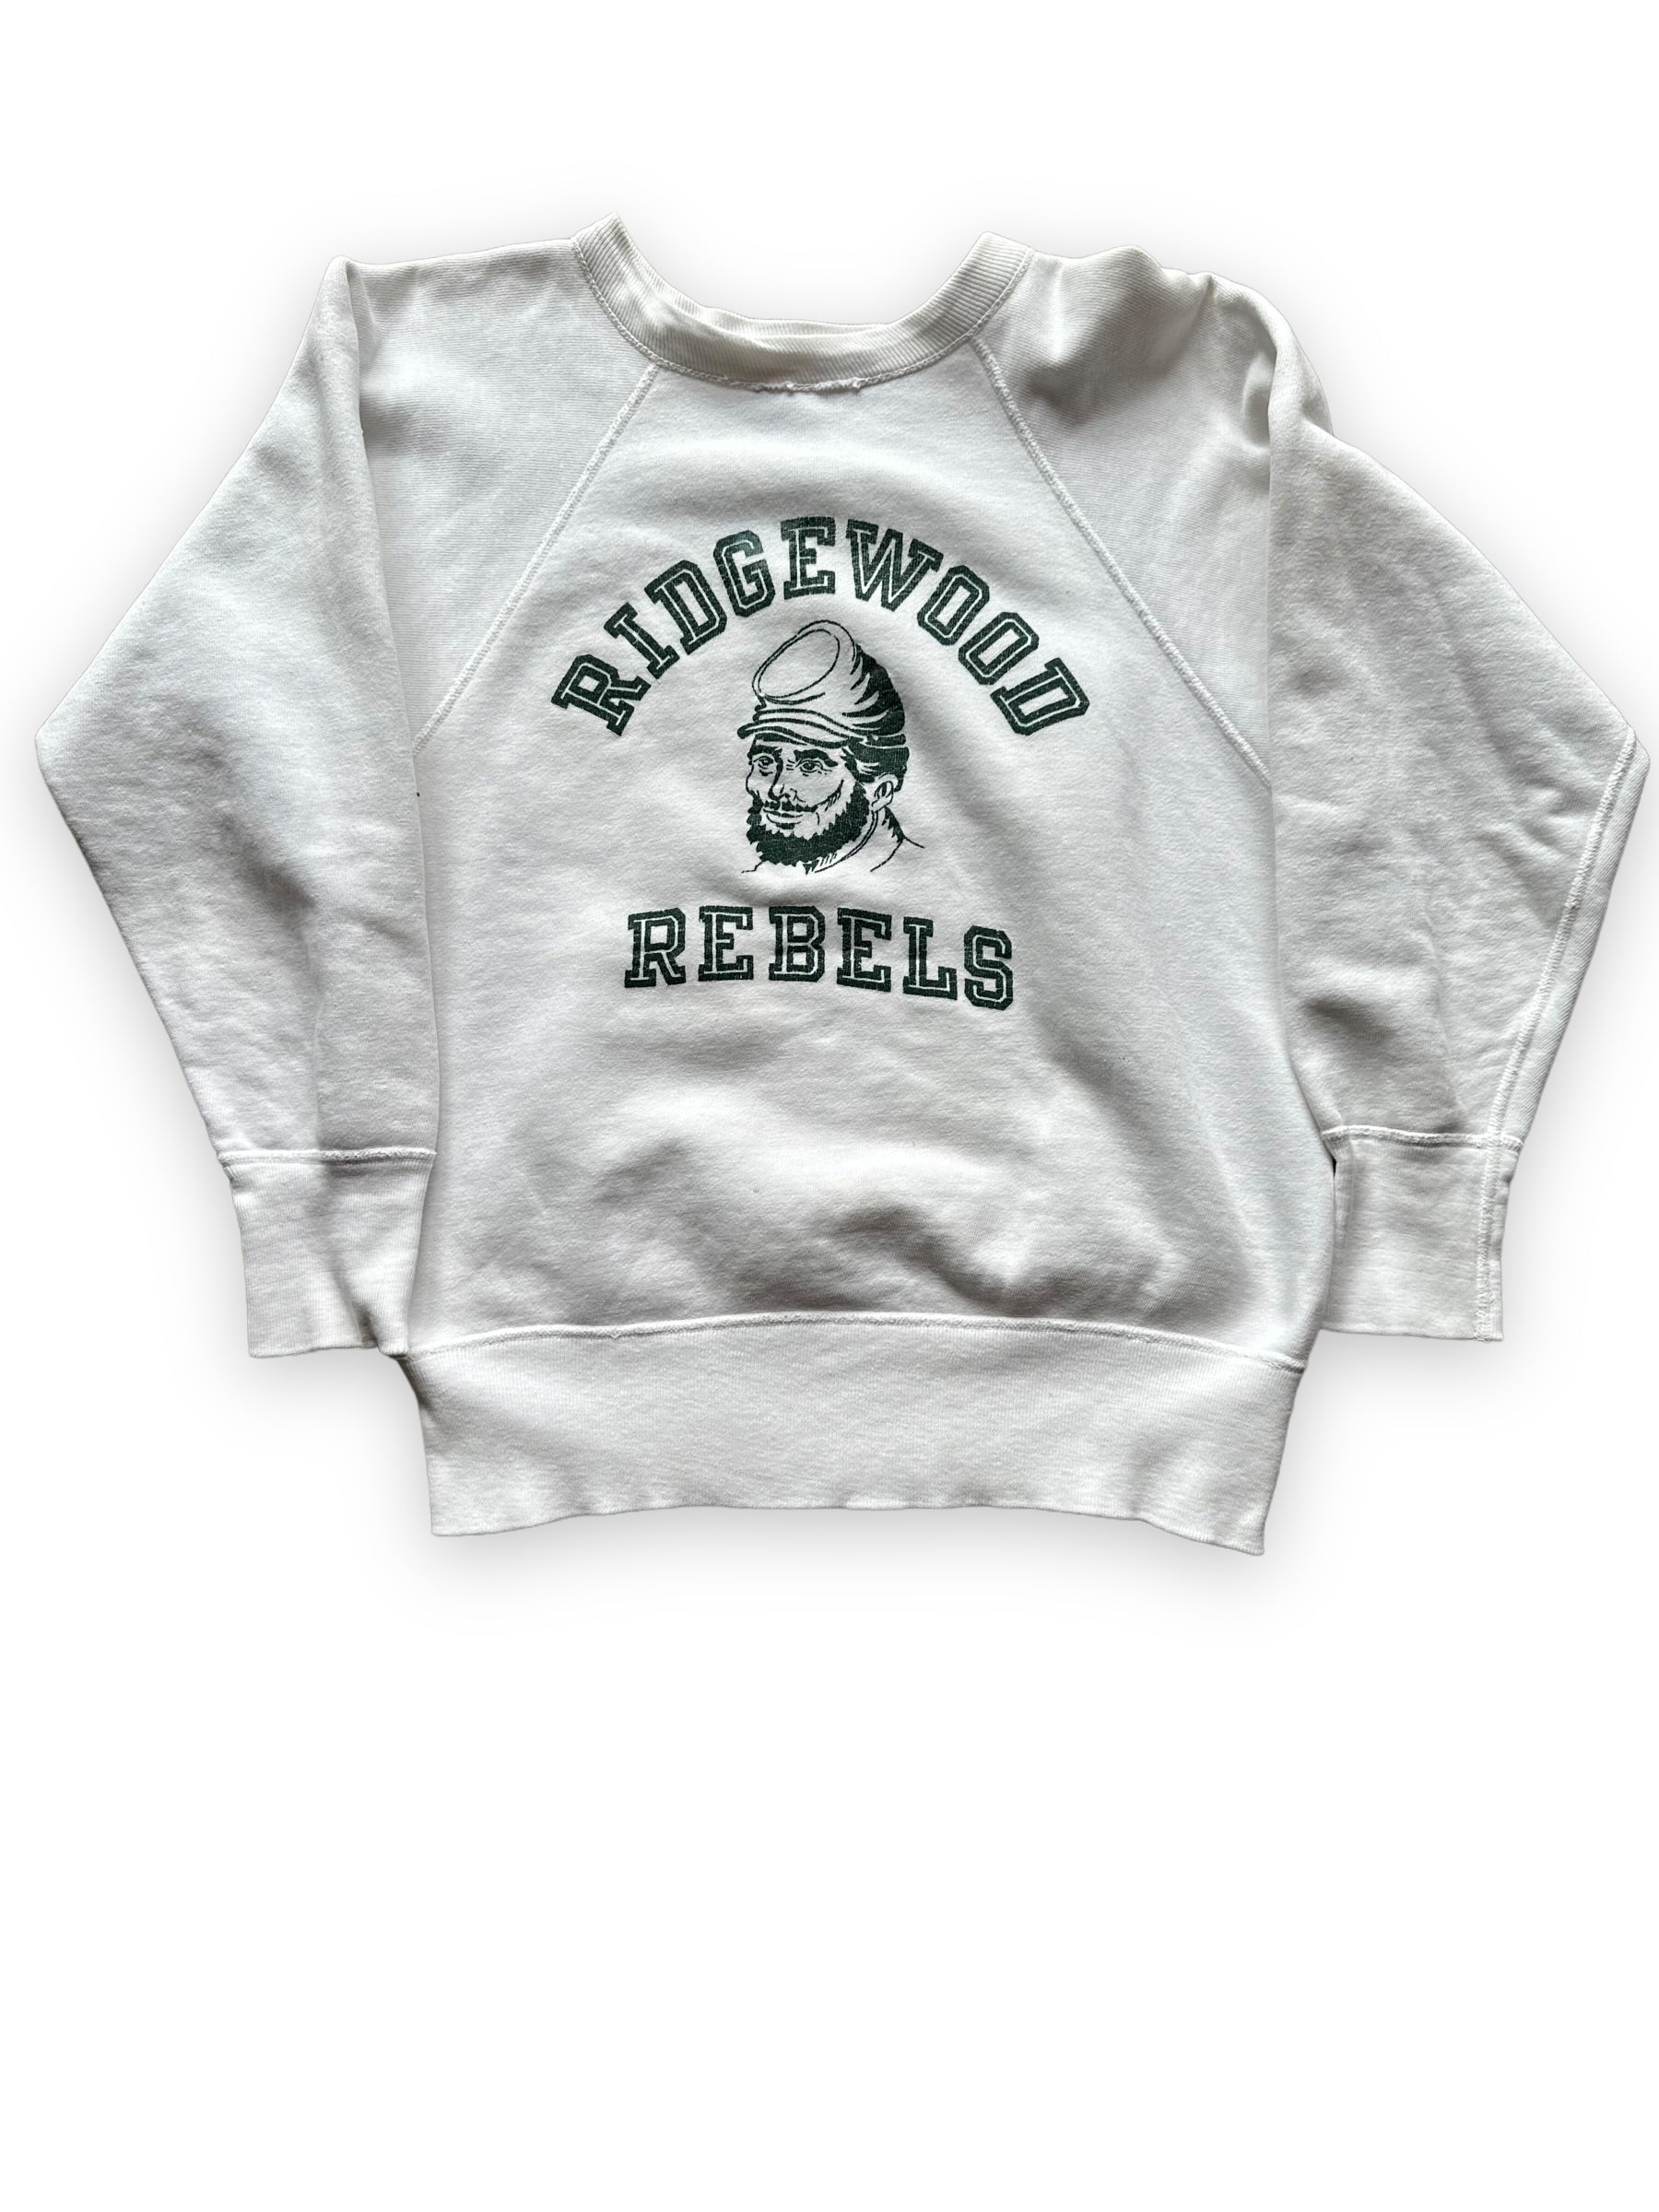 The Barn Owl Vintage Champion Running Man Ridgewood Rebels Crewneck Sweatshirt | Vintage Champion Sweatshirt Seattle | Barn Owl Vintage Clothing